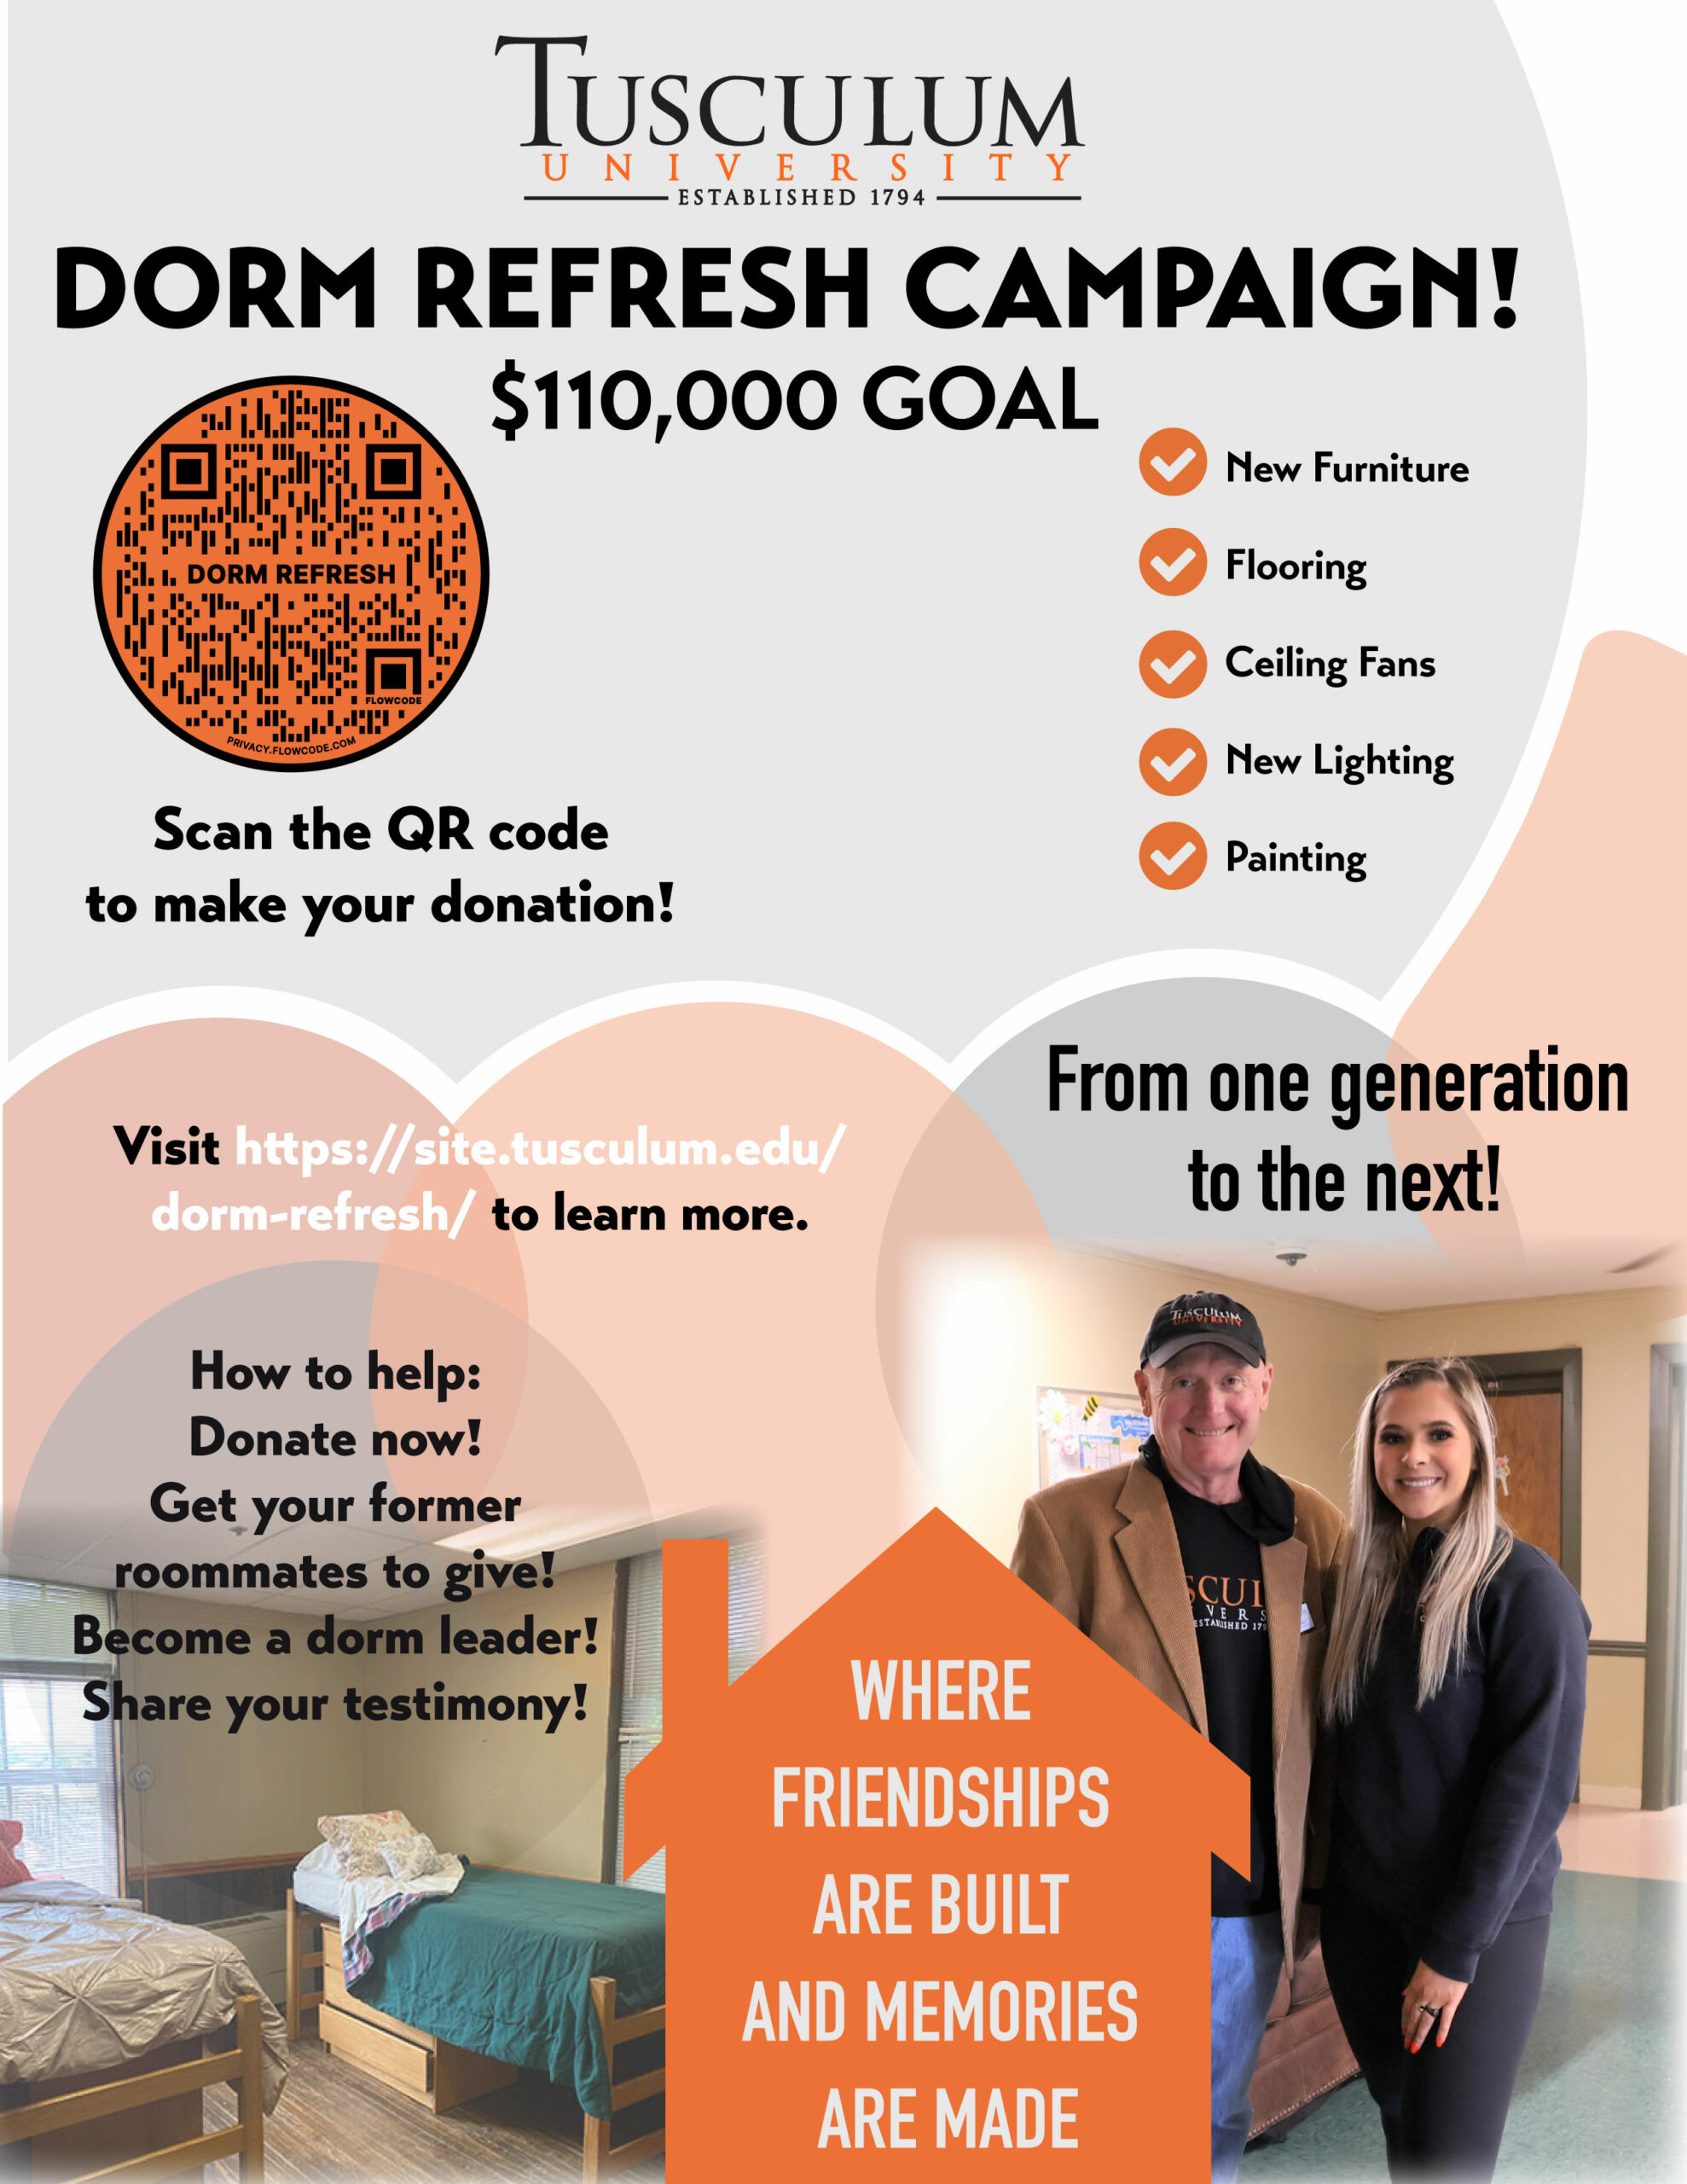 Dorm Refresh Campaign: $110,000 Goal